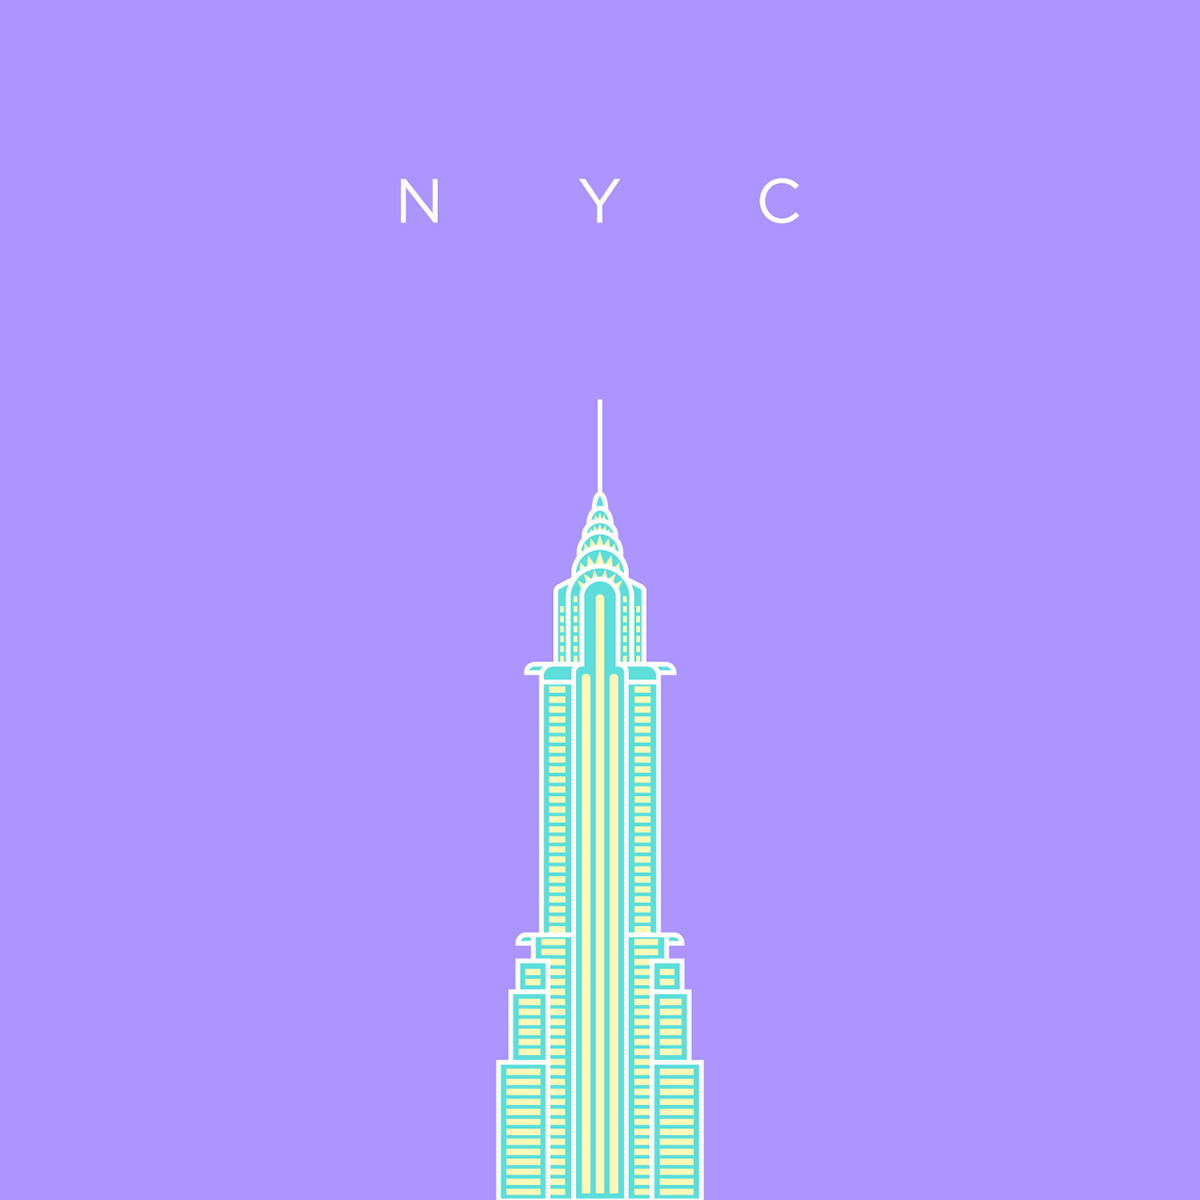 nyc New York new york city empire state building World Trade Center chrysler building